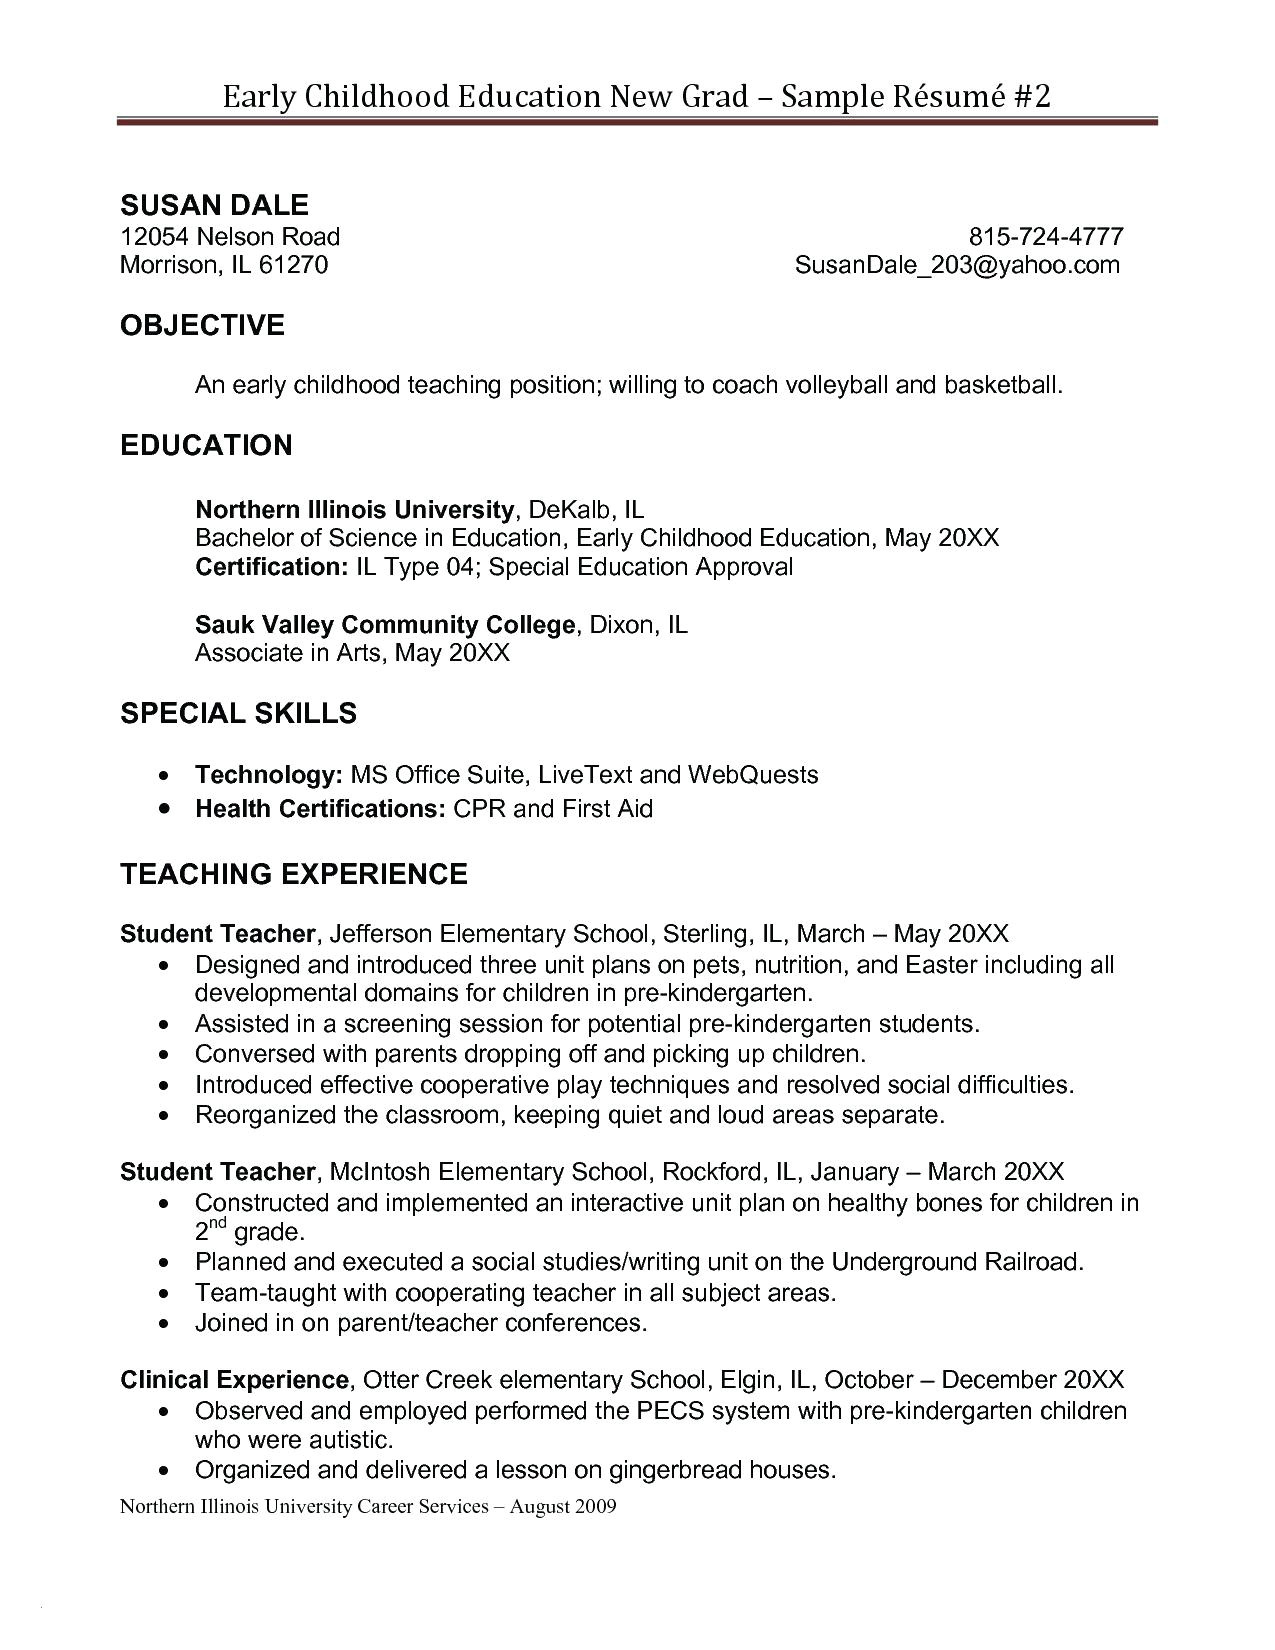 resume format for nursery school teacher